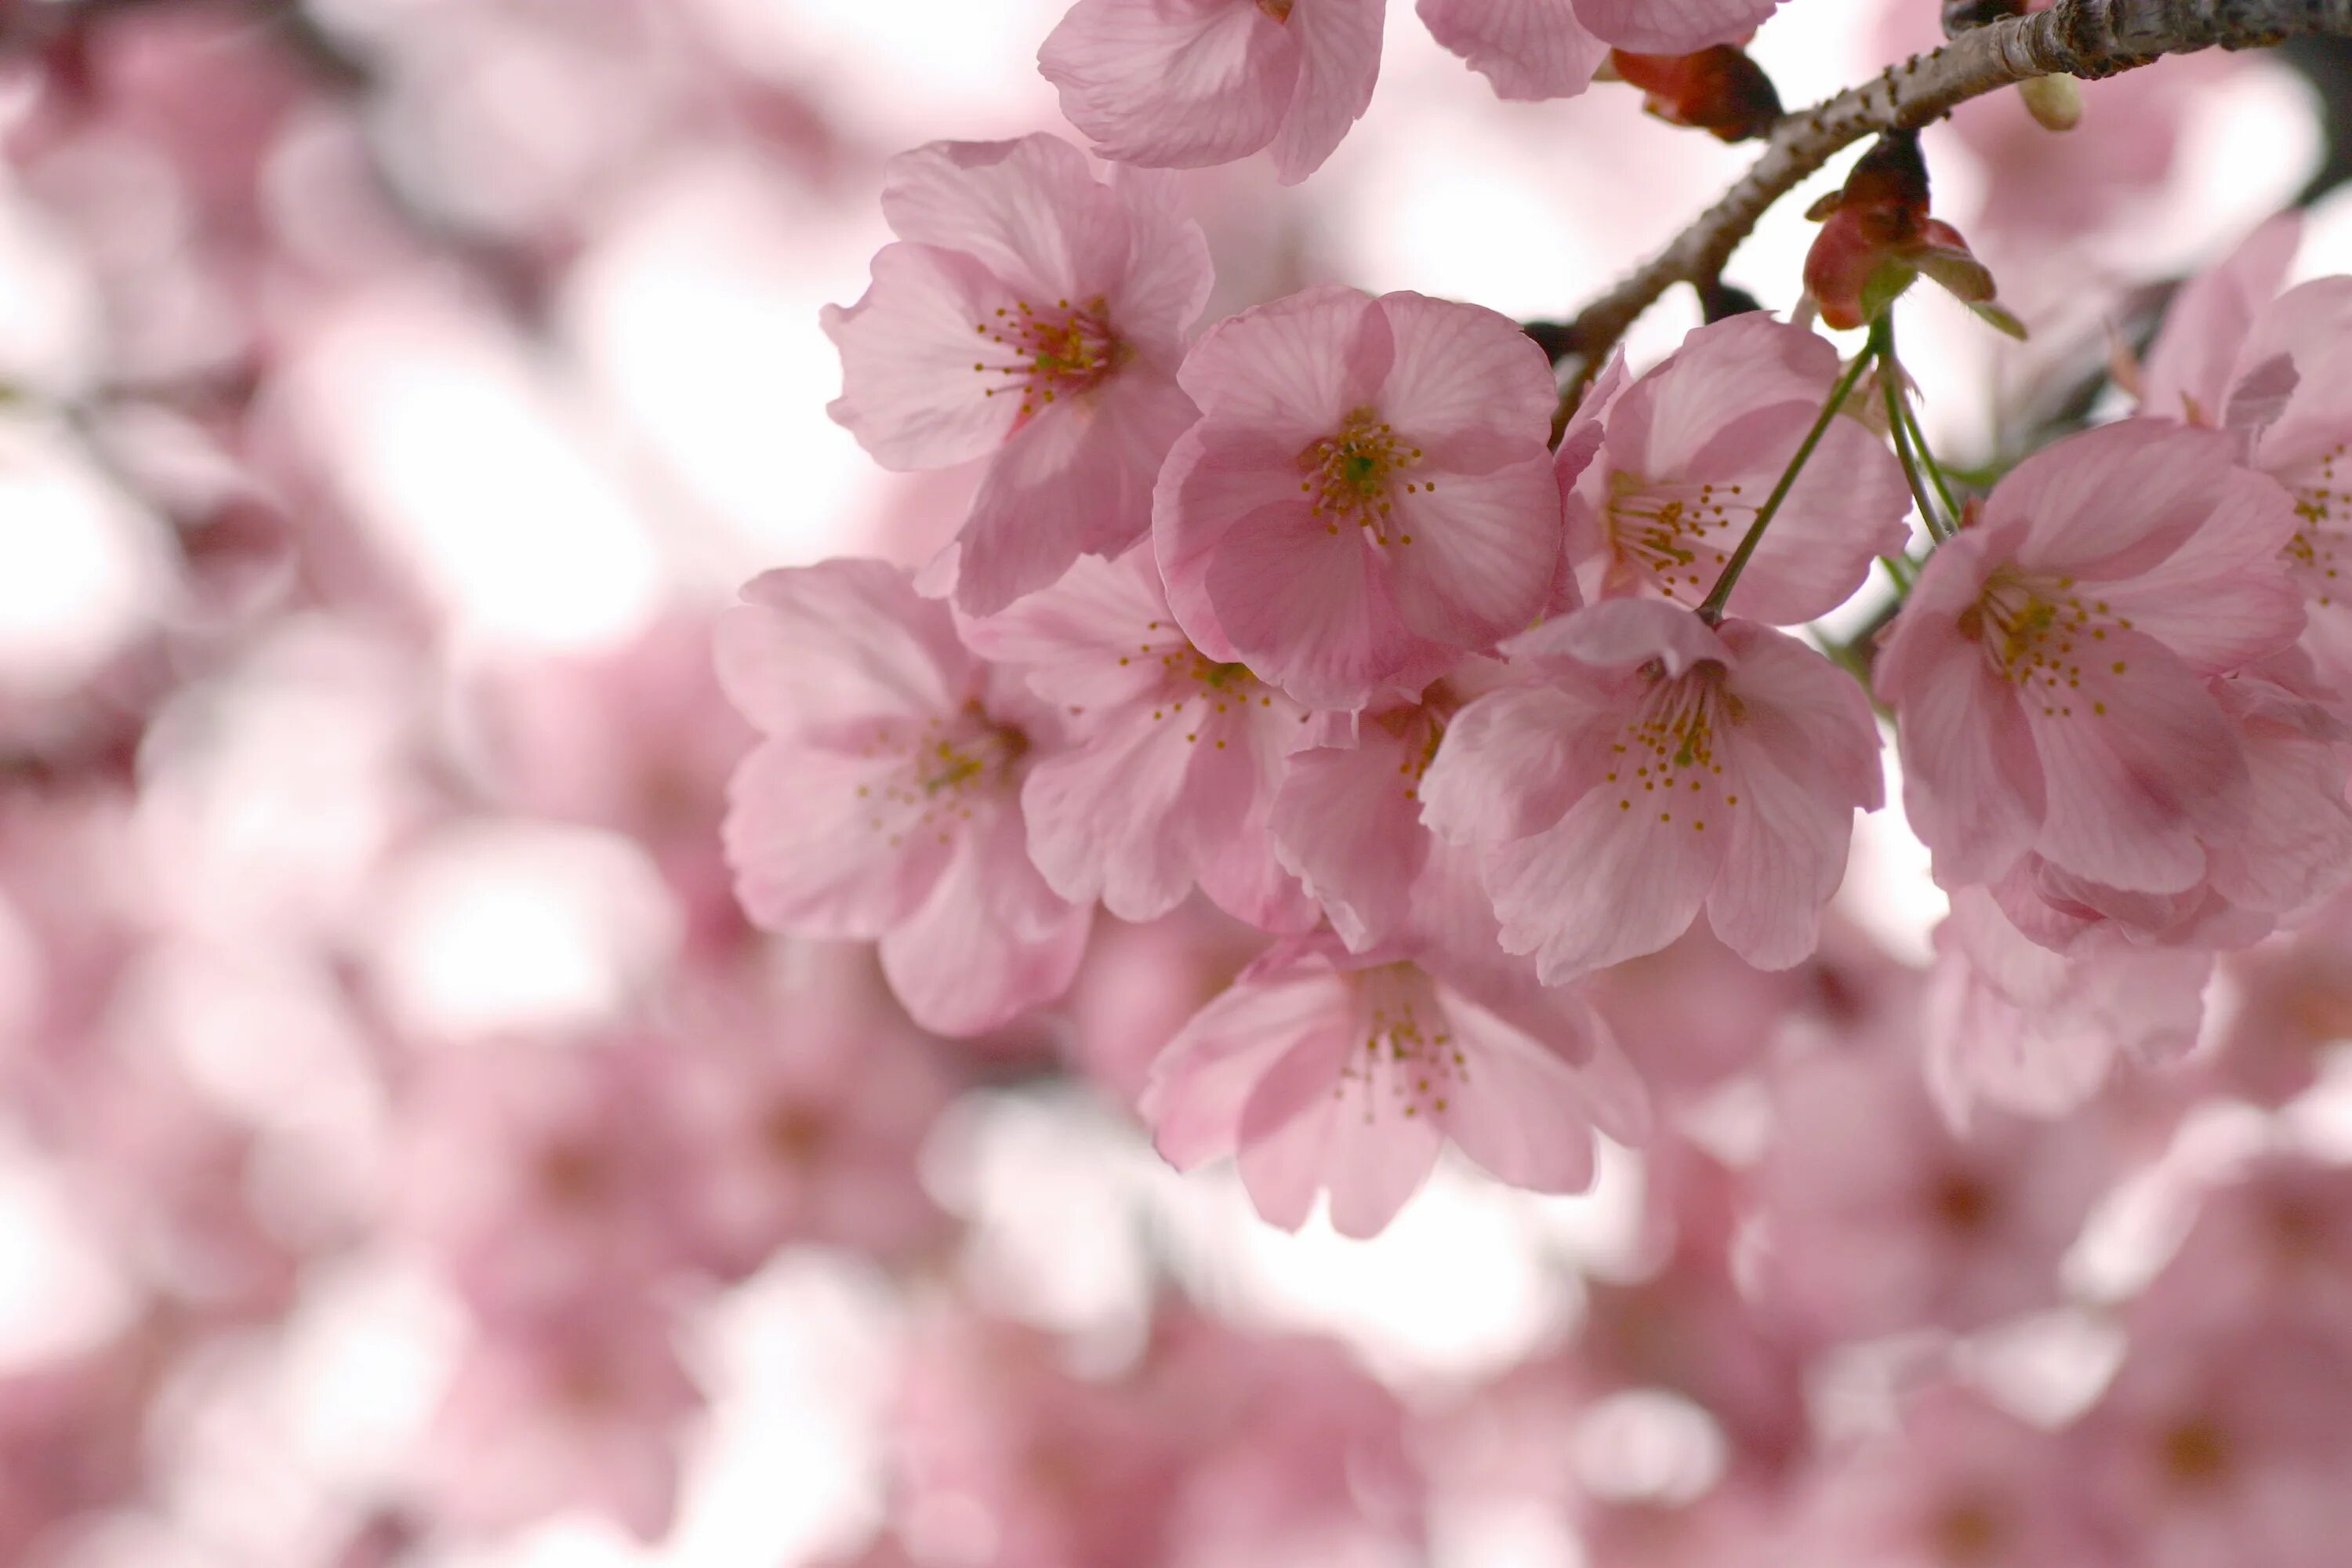 Bahor gullari. Цветы Сакуры. Розовые цветы. Нежные весенние цветы.